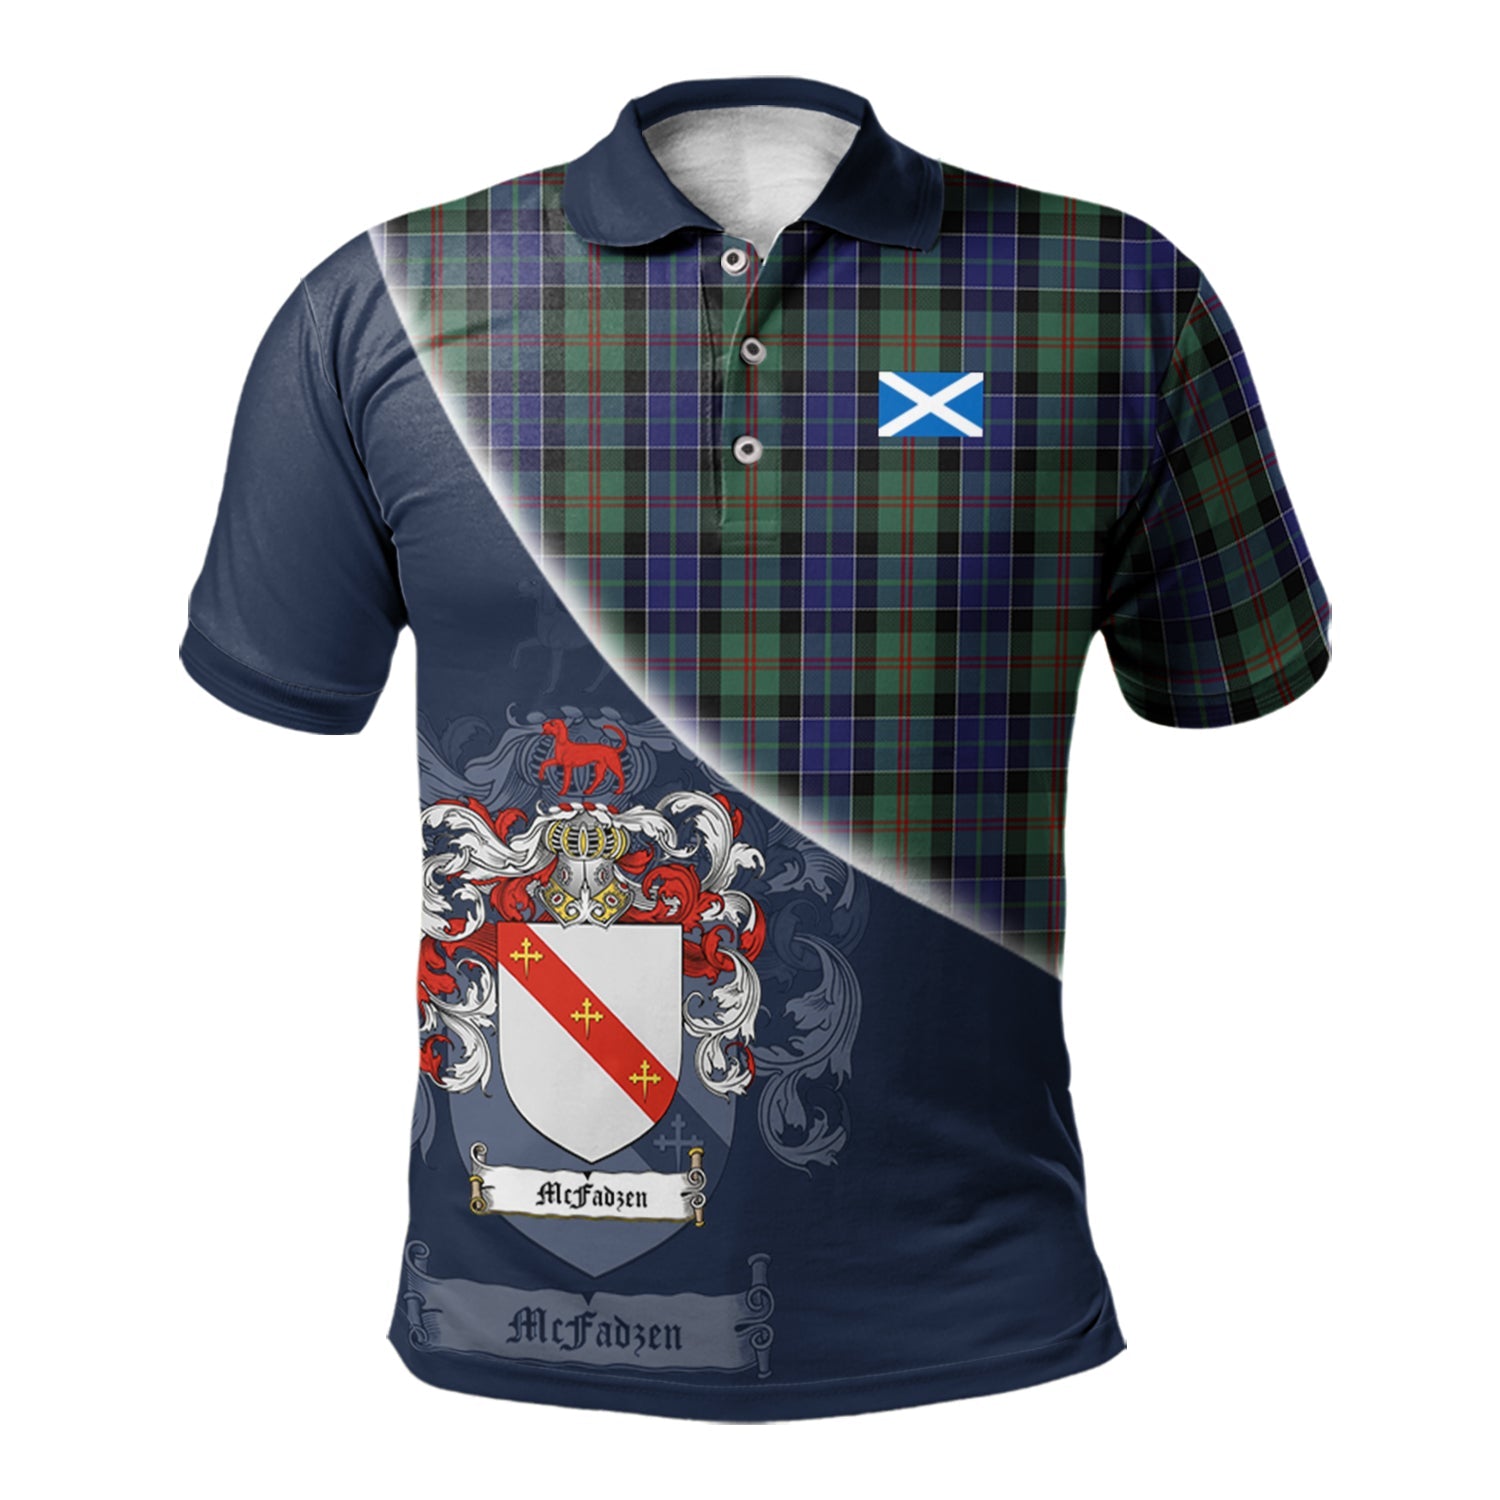 scottish-mcfadzen-02-clan-crest-tartan-scotland-flag-half-style-polo-shirt